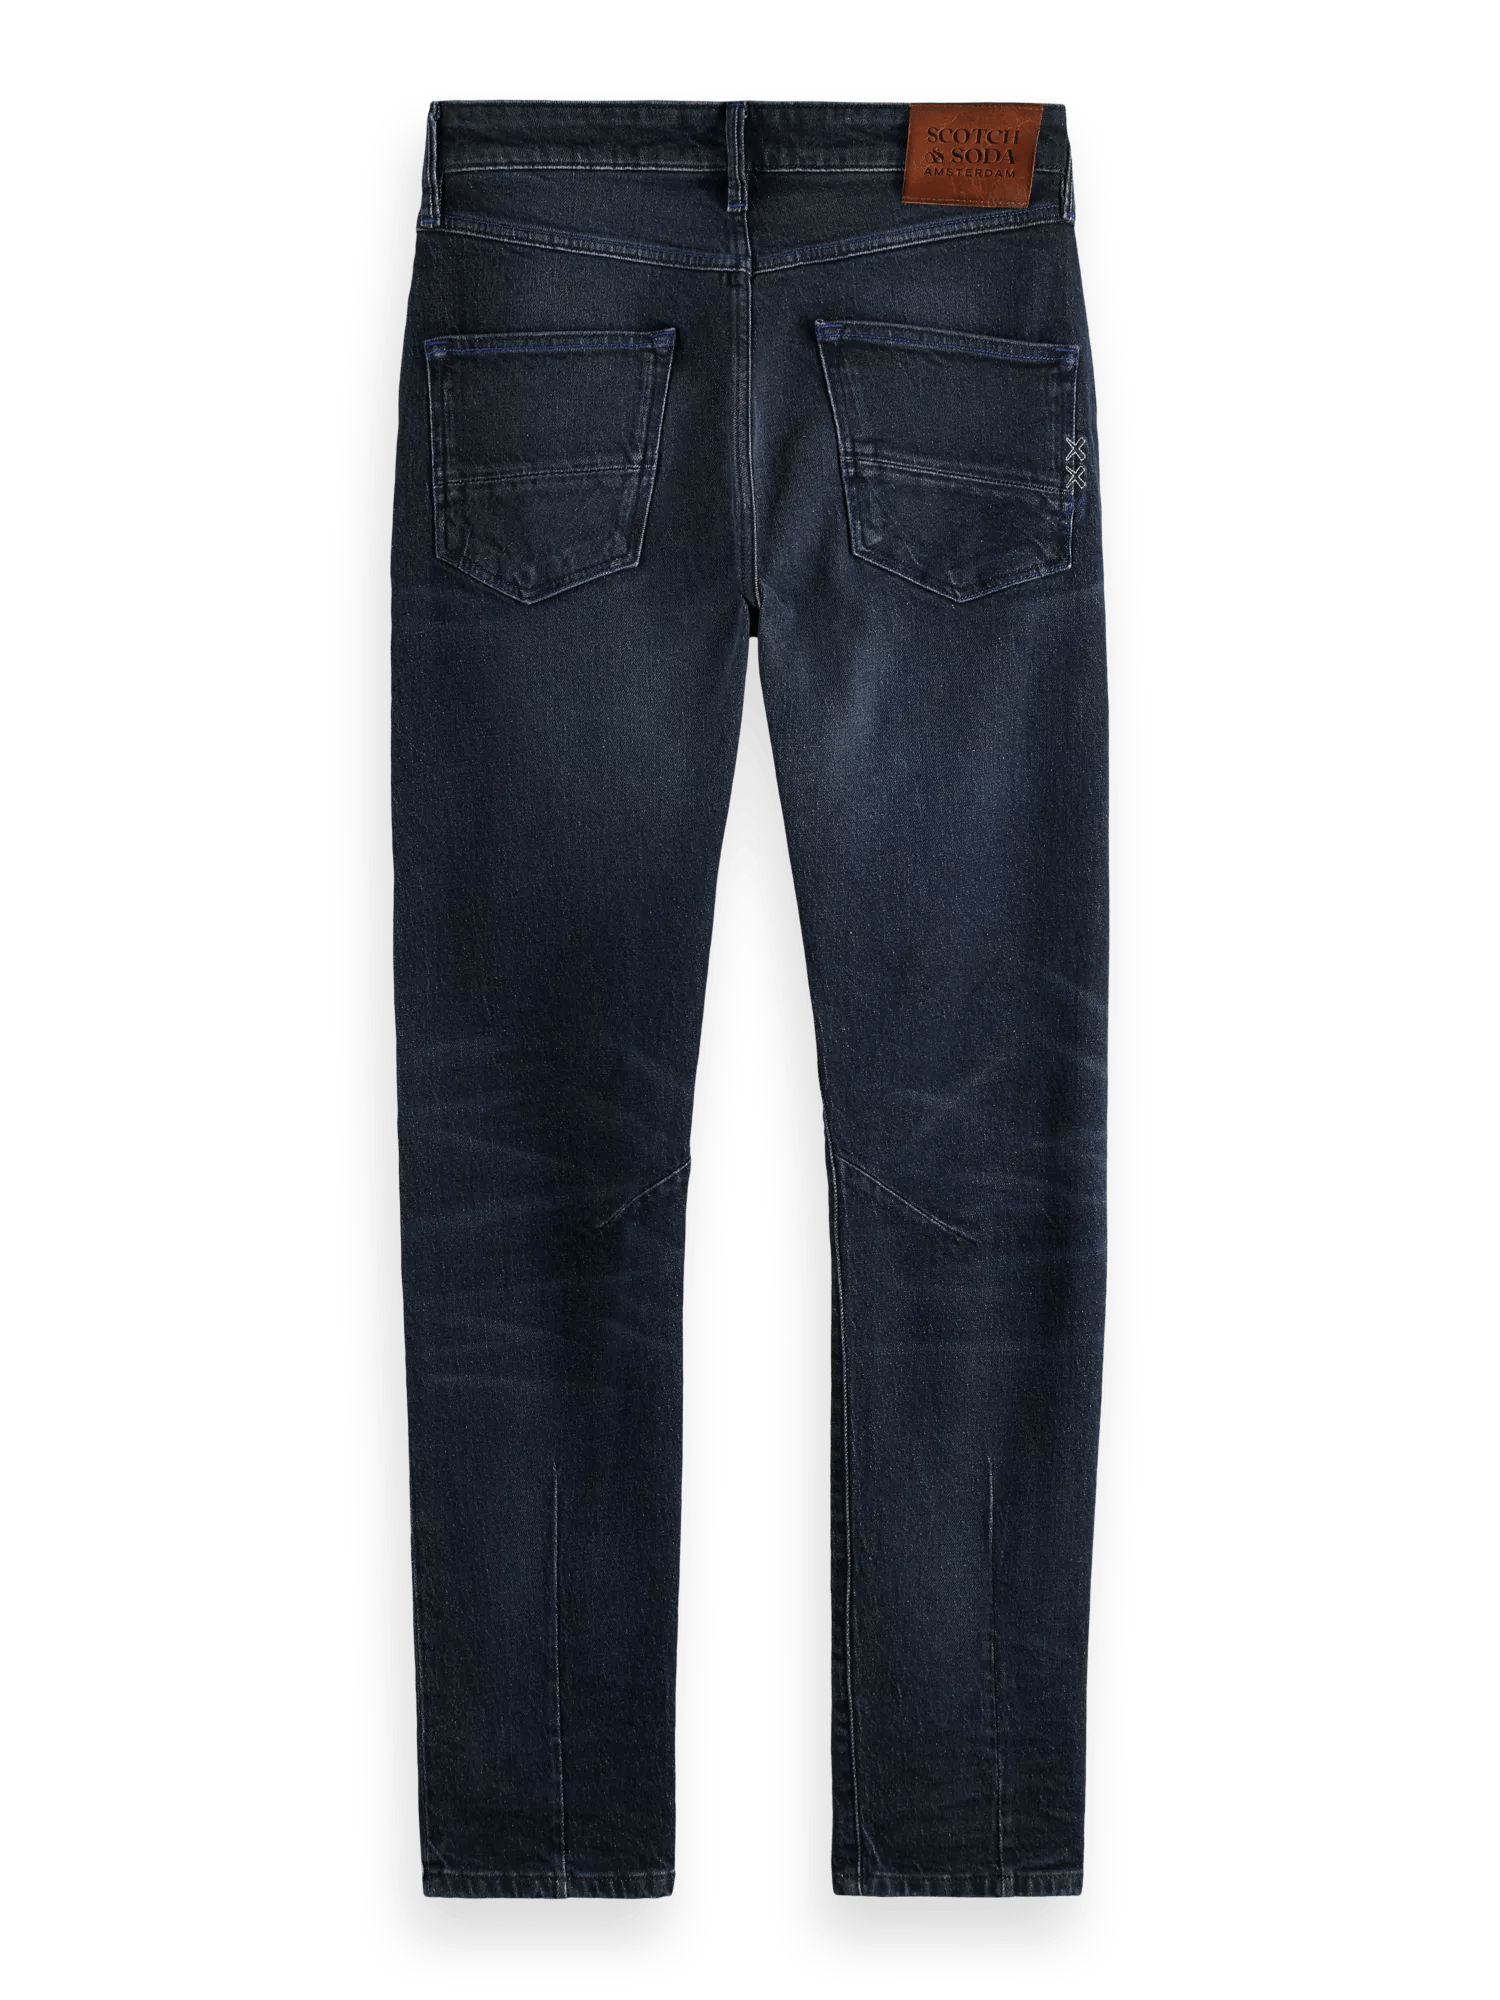 Scotch & Soda De Singel slim tapered-fit jeans - Skygazer BCK